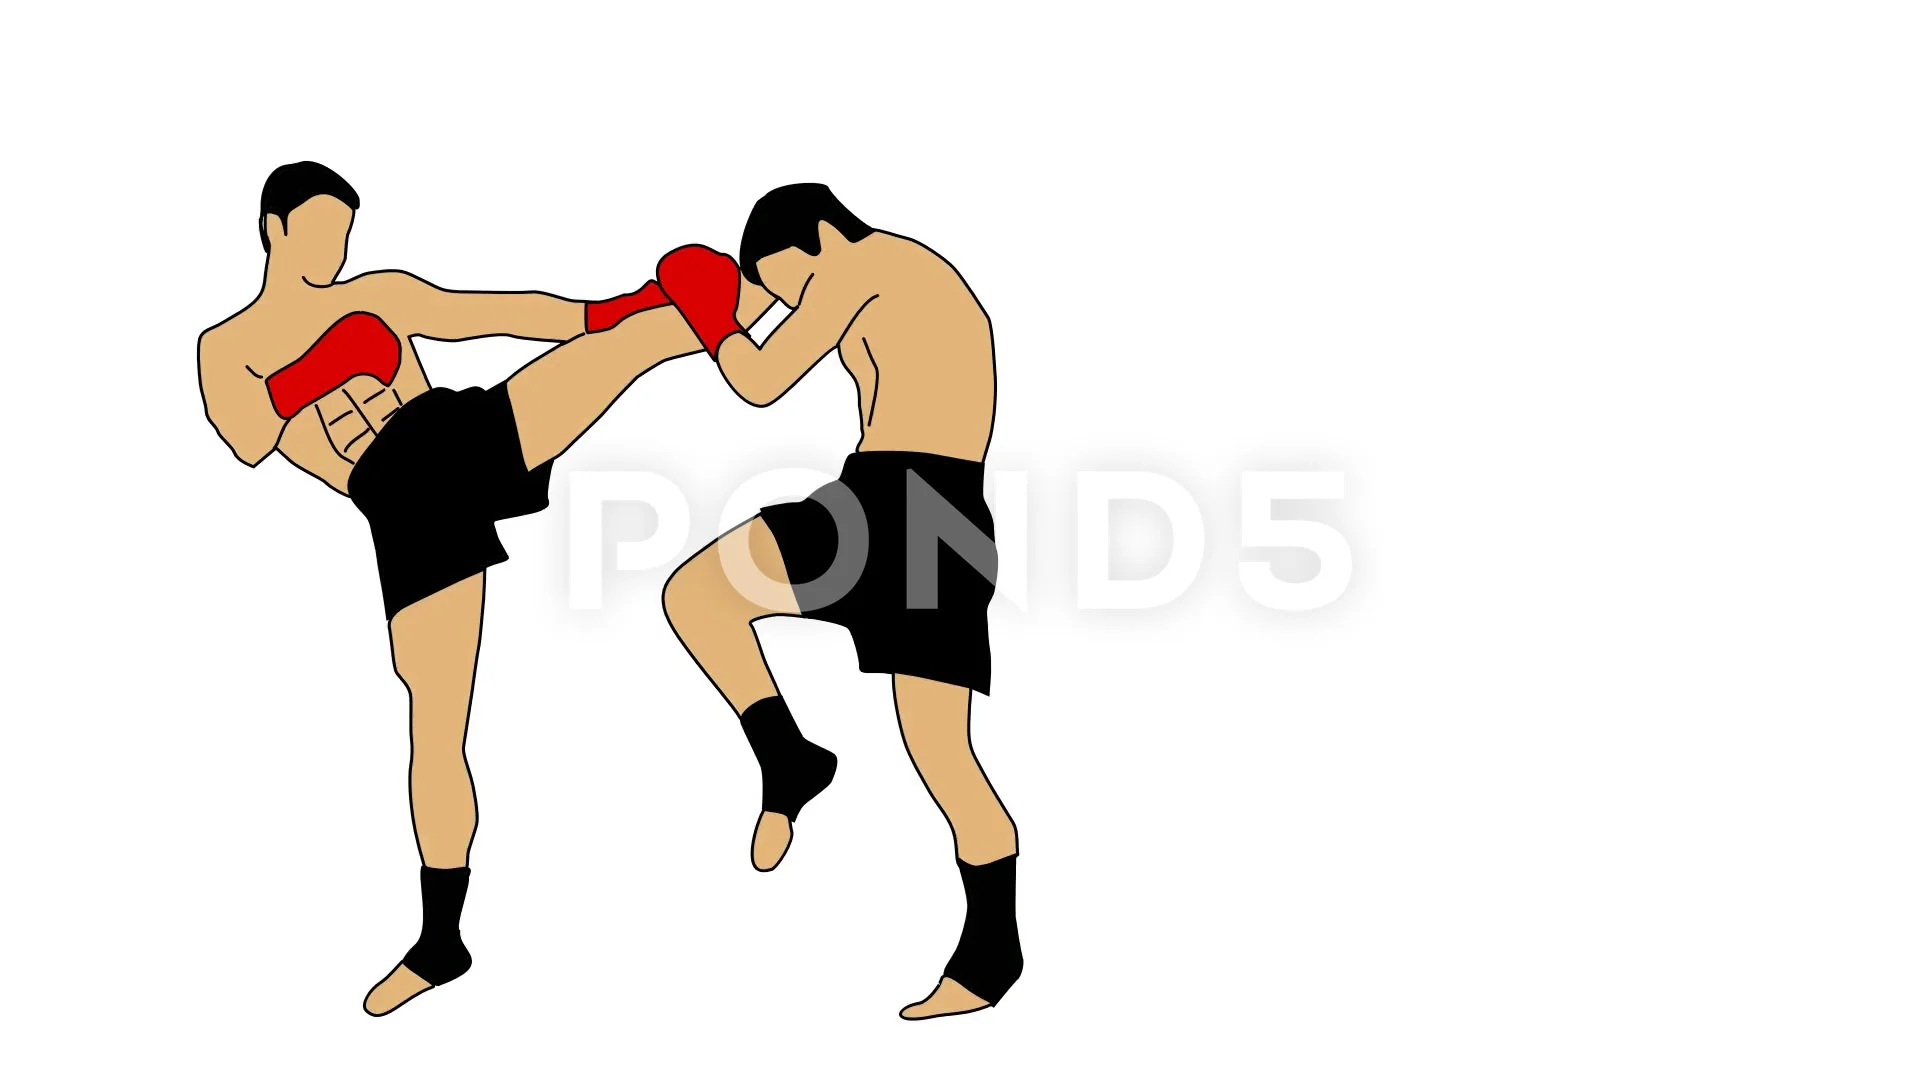 kickboxing drawings